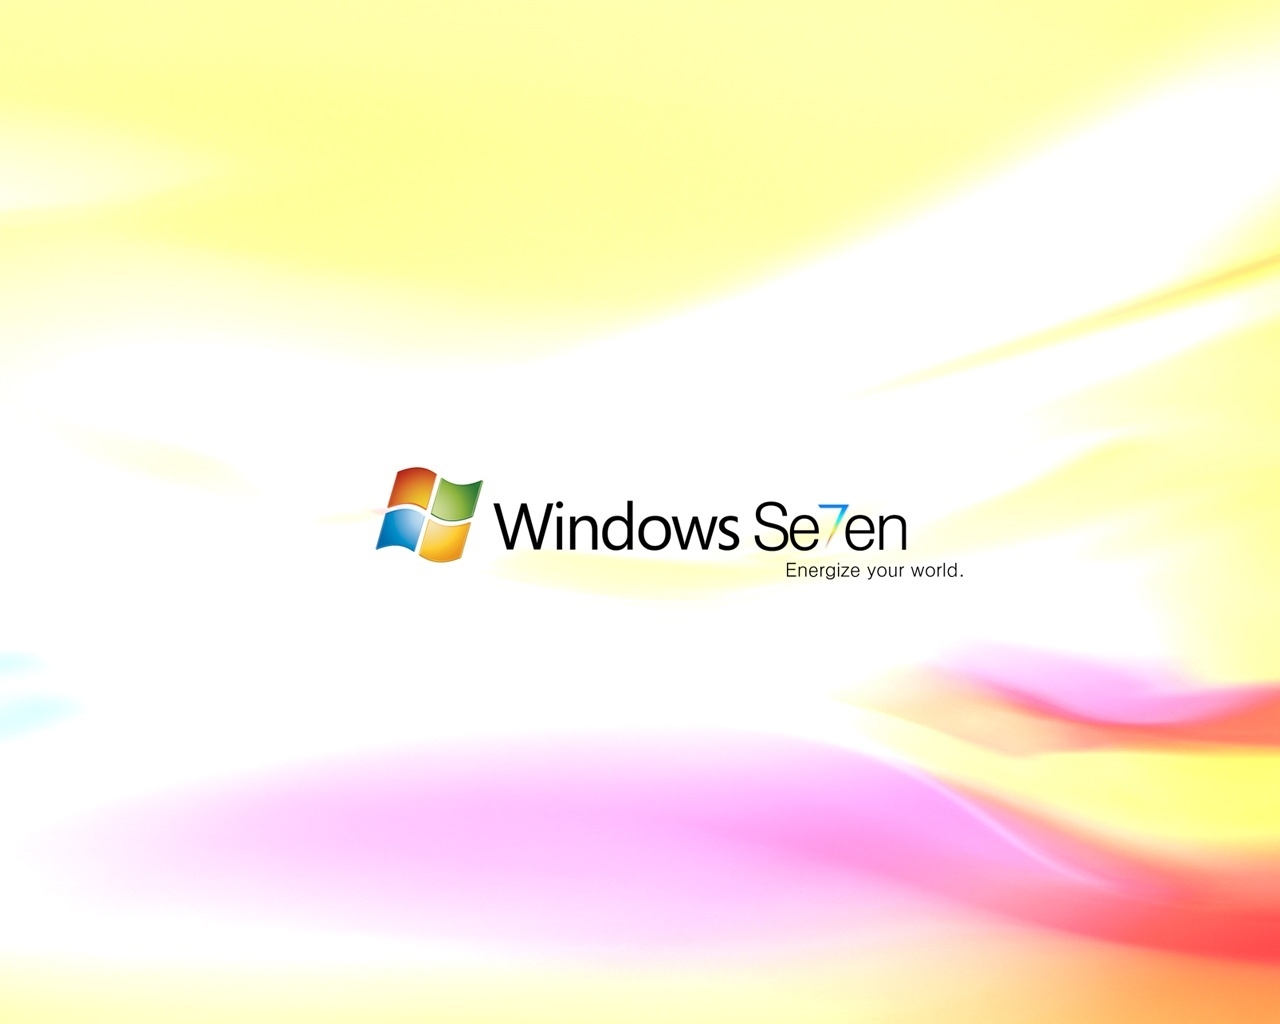 Windows 7 for 1280 x 1024 resolution